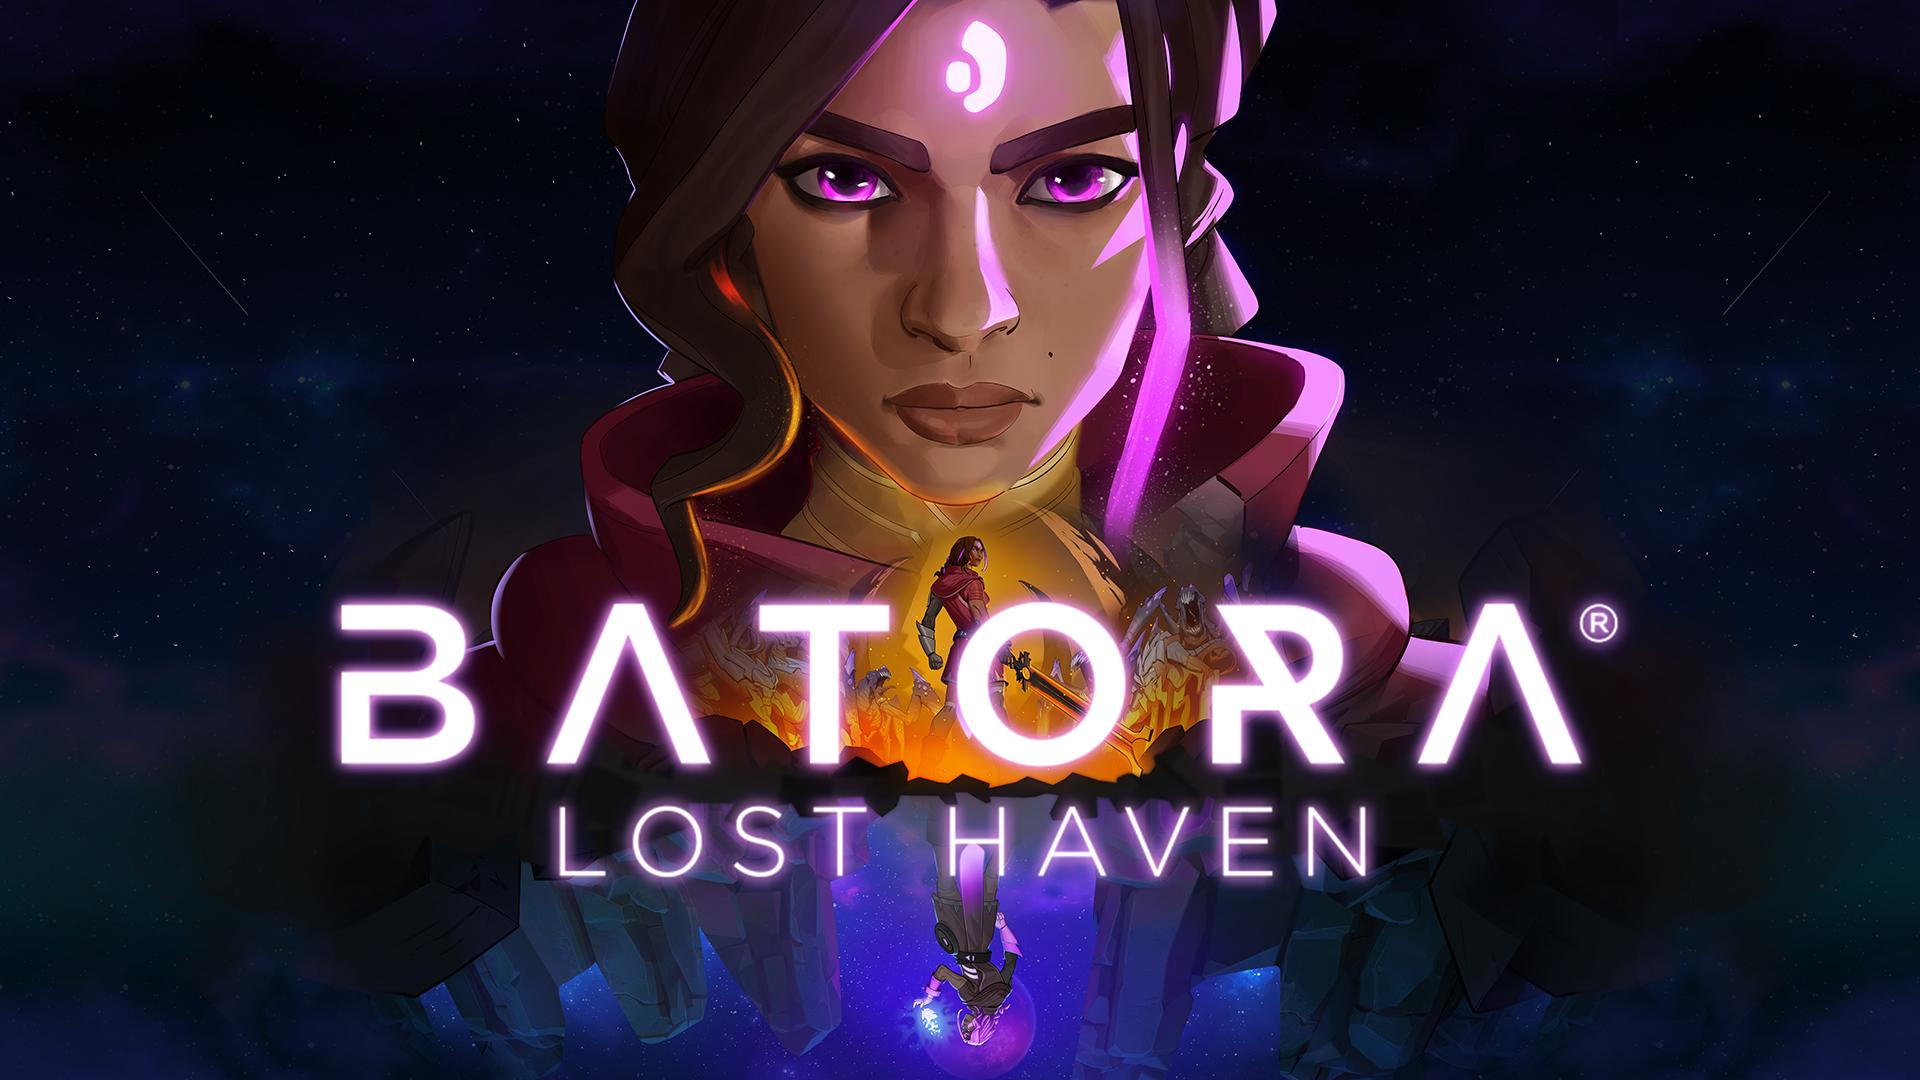 download the new Batora: Lost Haven